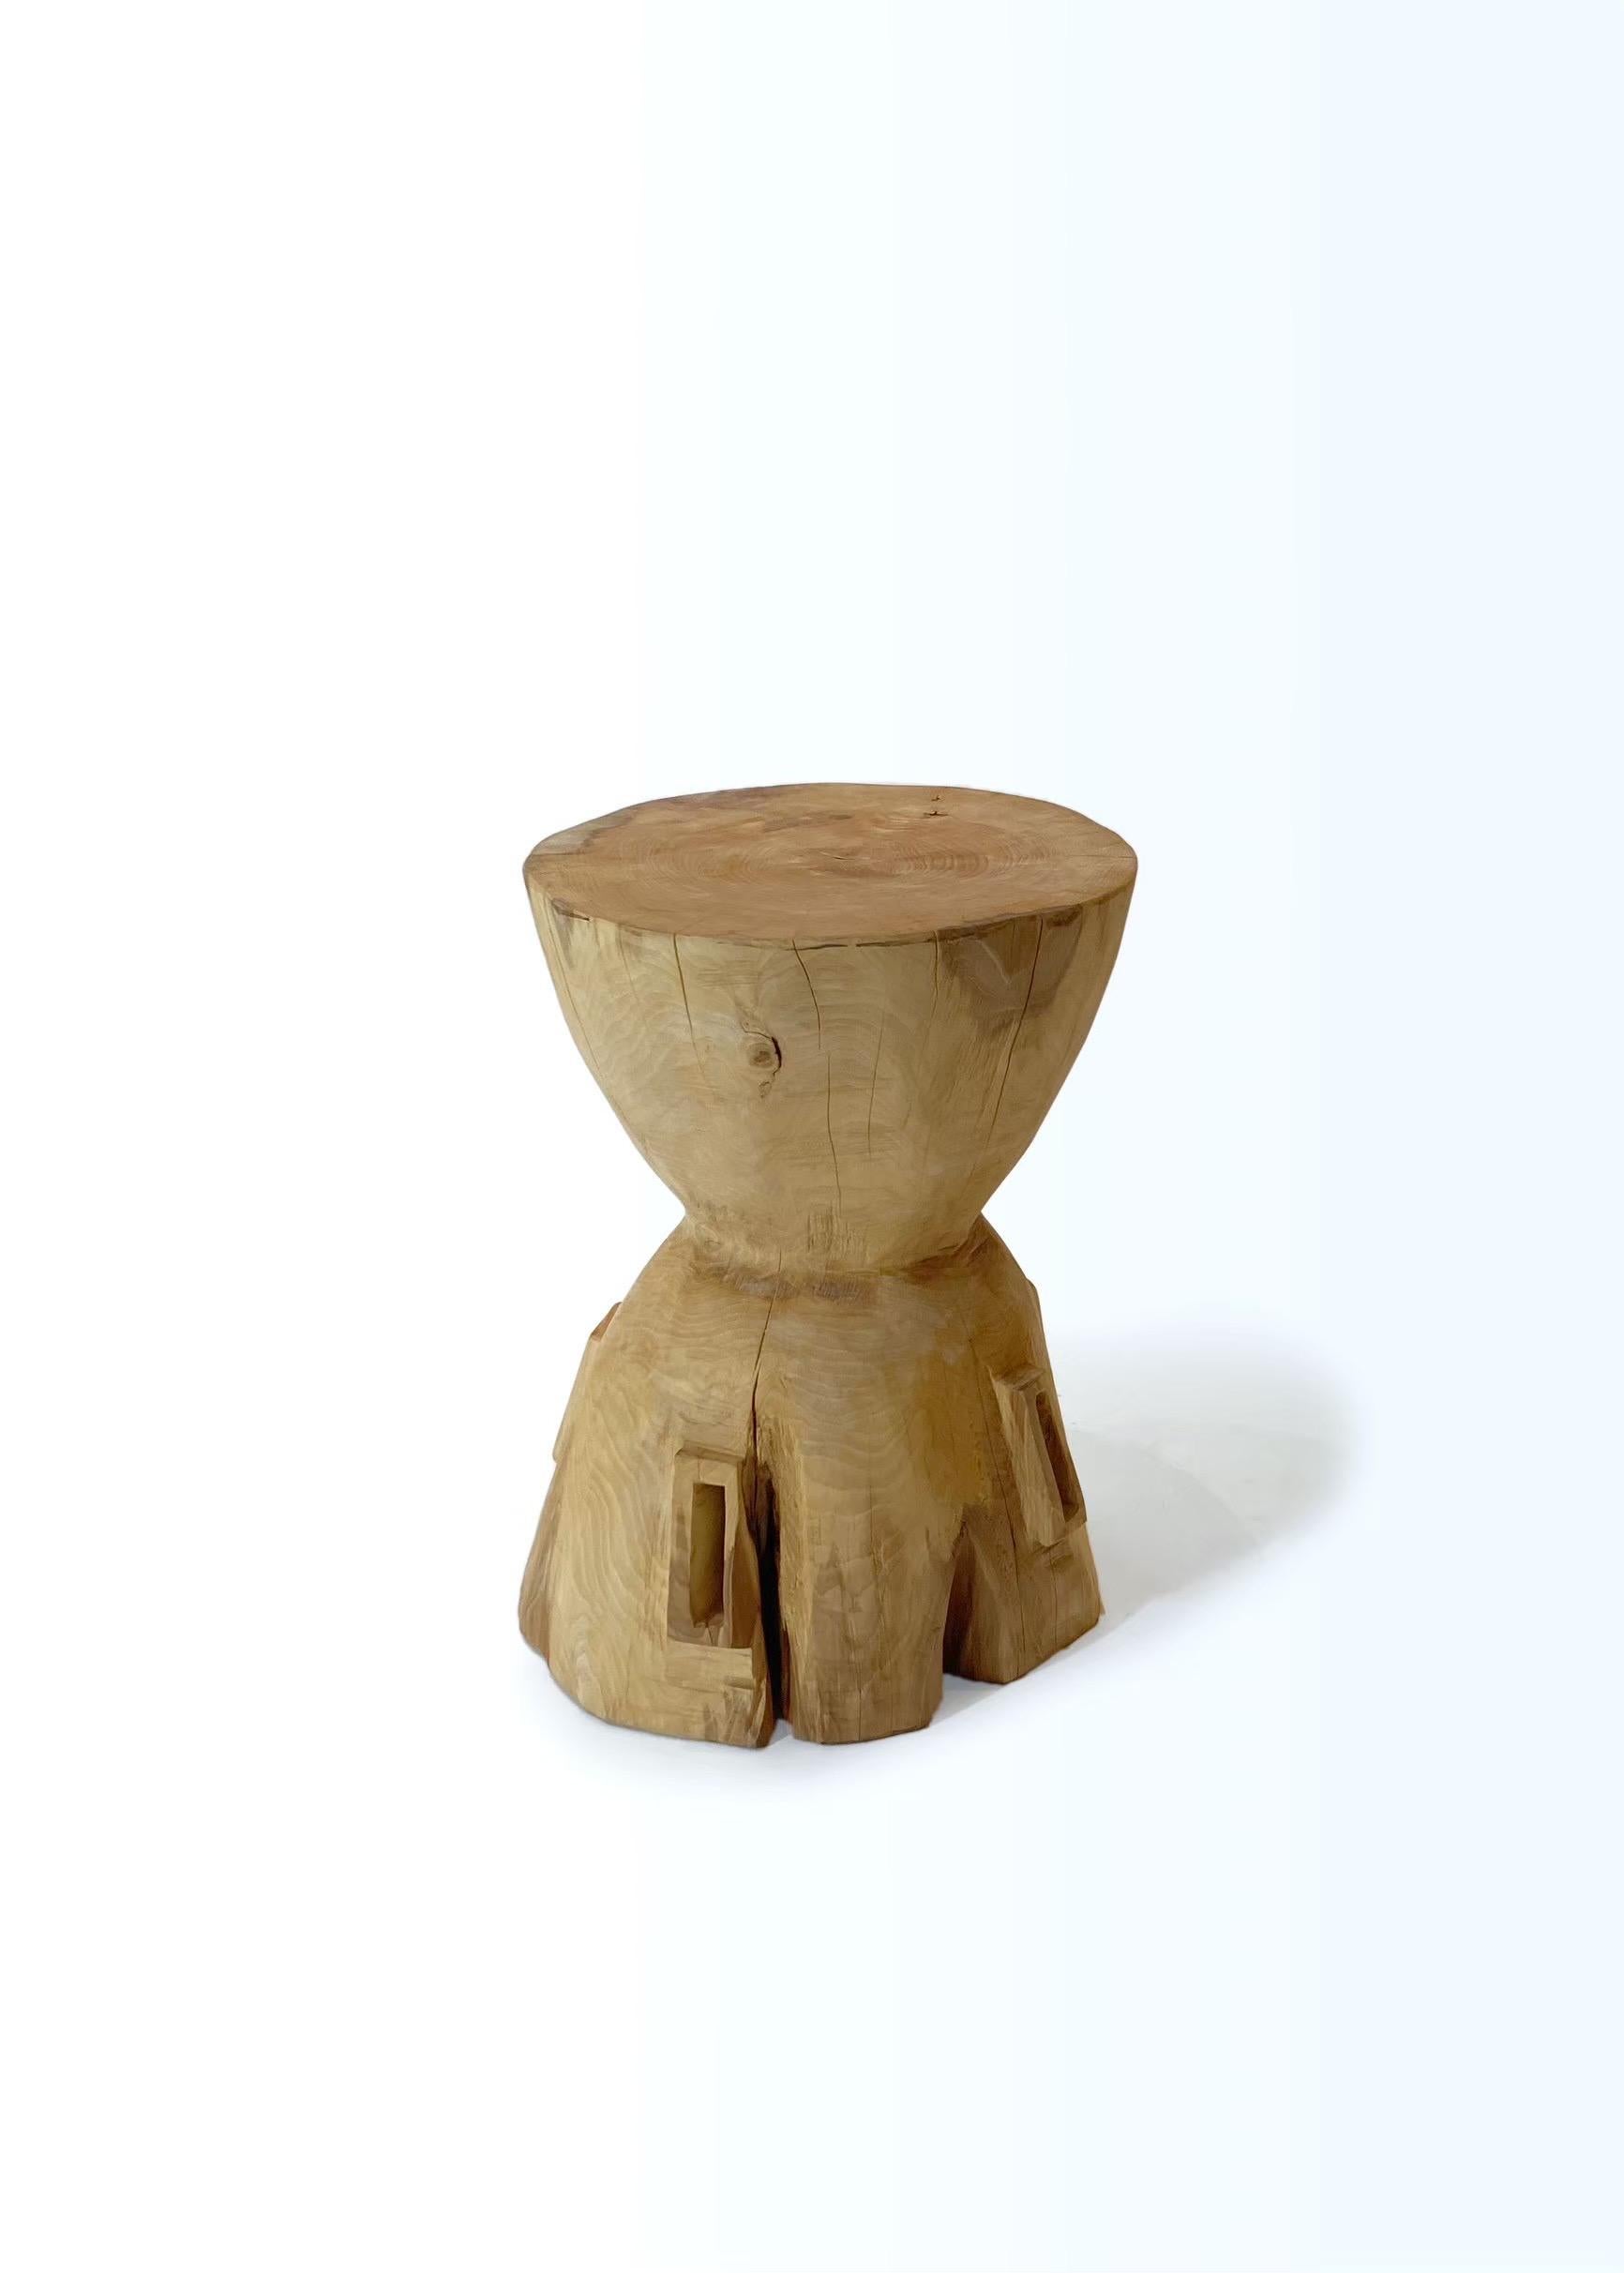 Contemporary Hiroyuki Nishimura Furniture Sculptural Wood Stool 1  Tribal Glamping For Sale